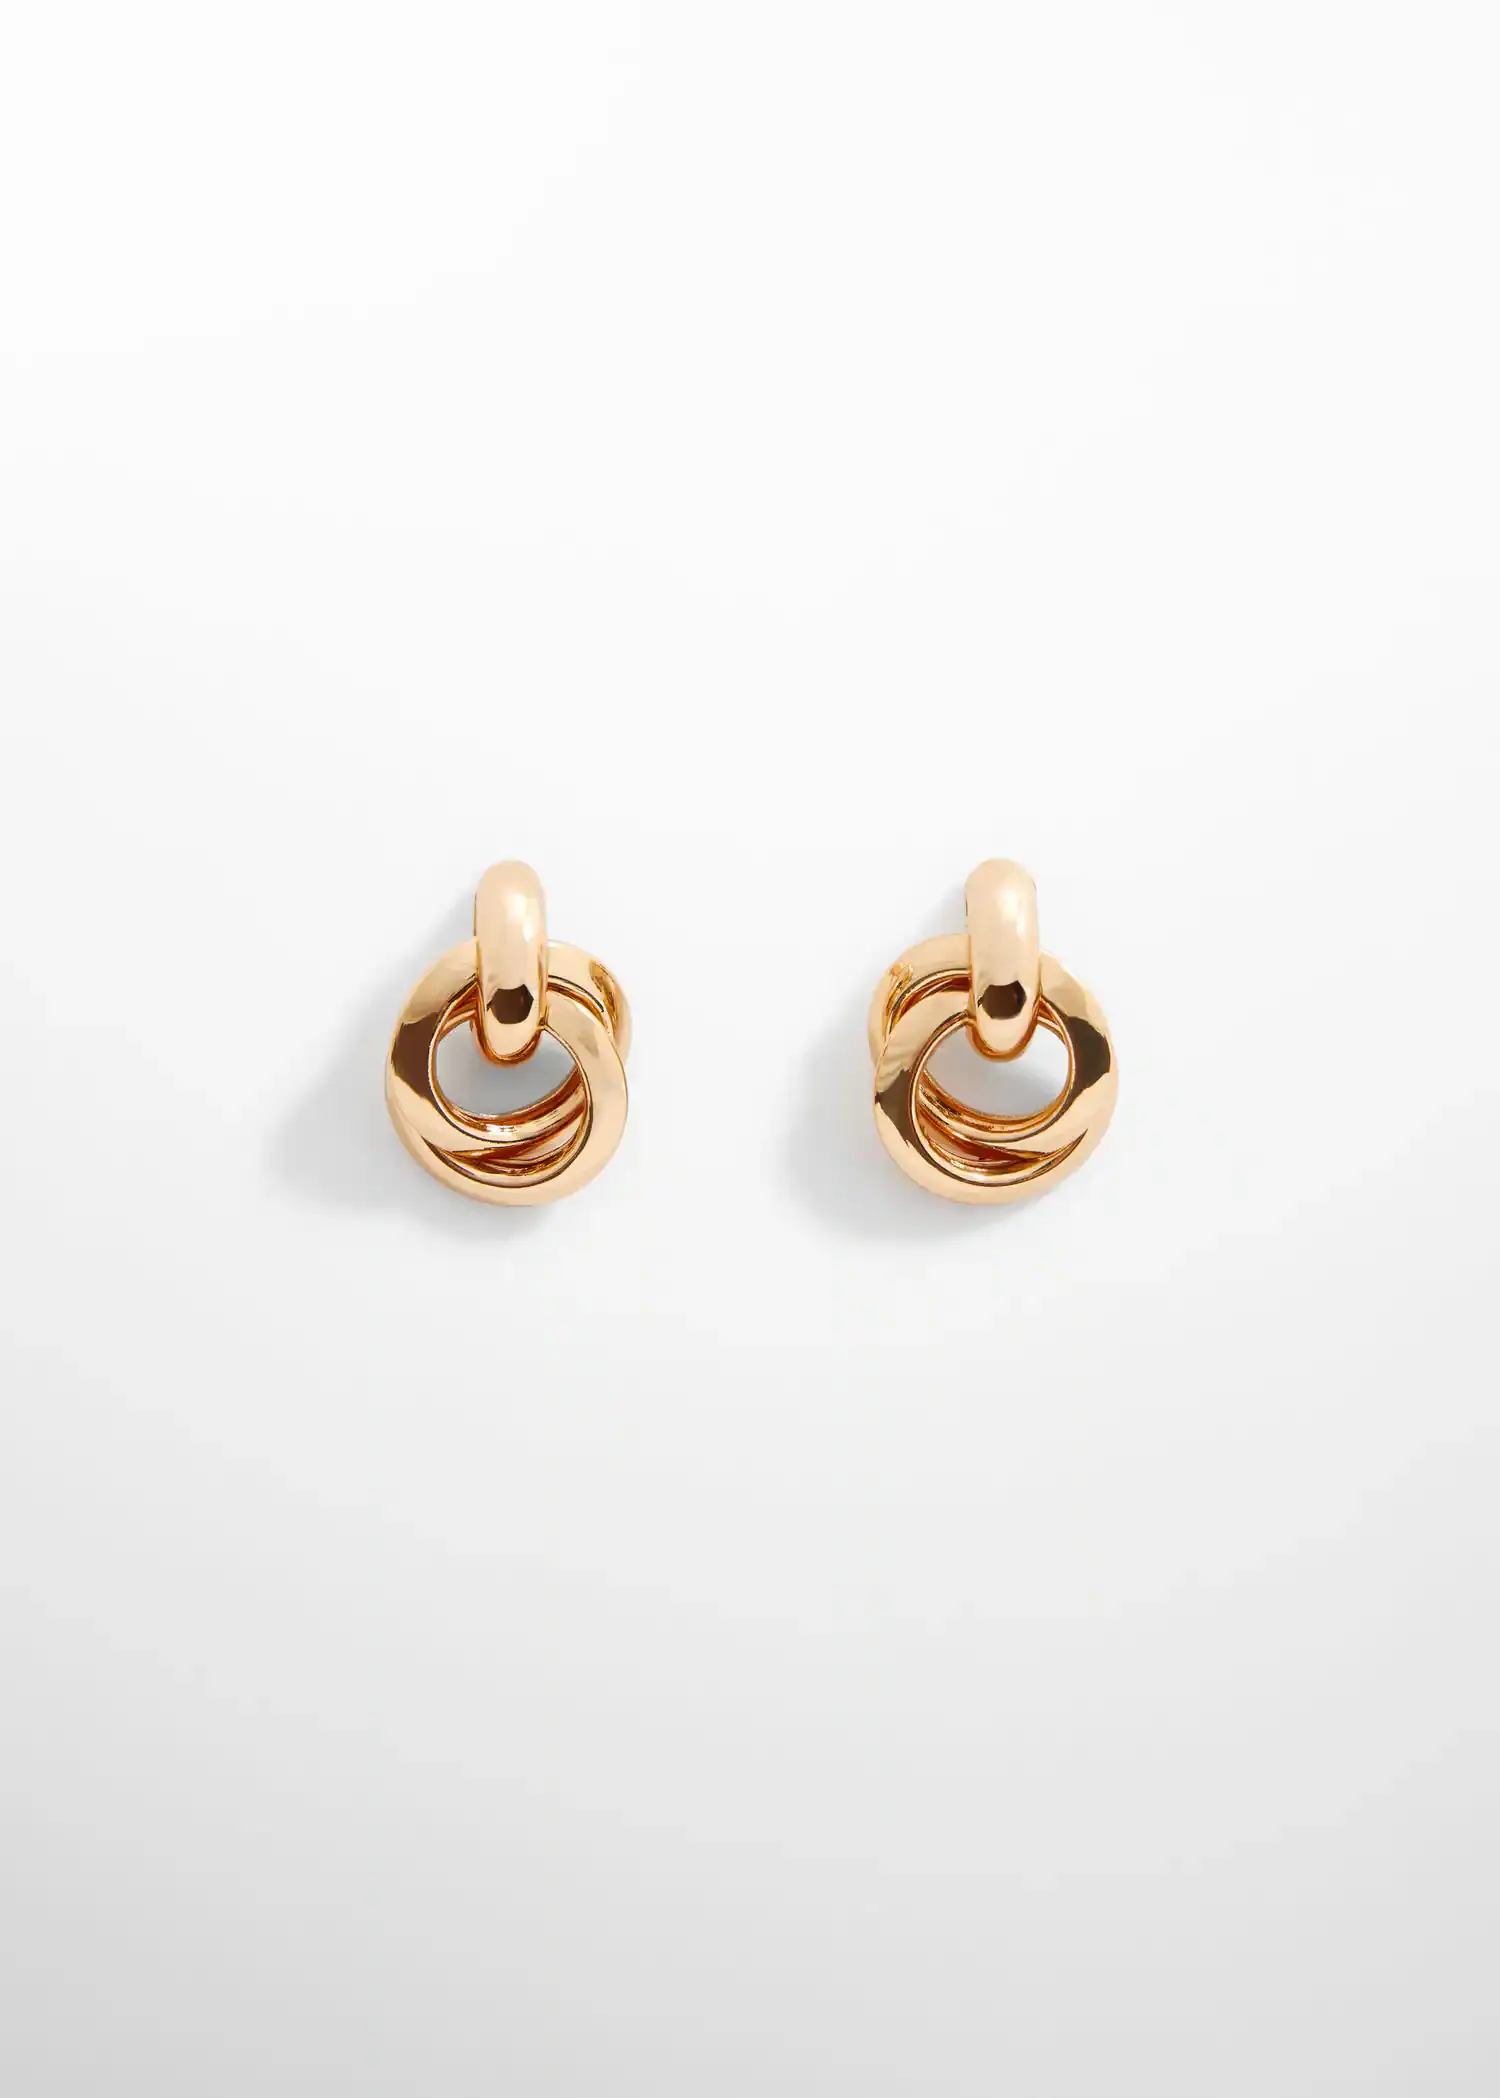 Mango Intertwined hoop earrings. 2